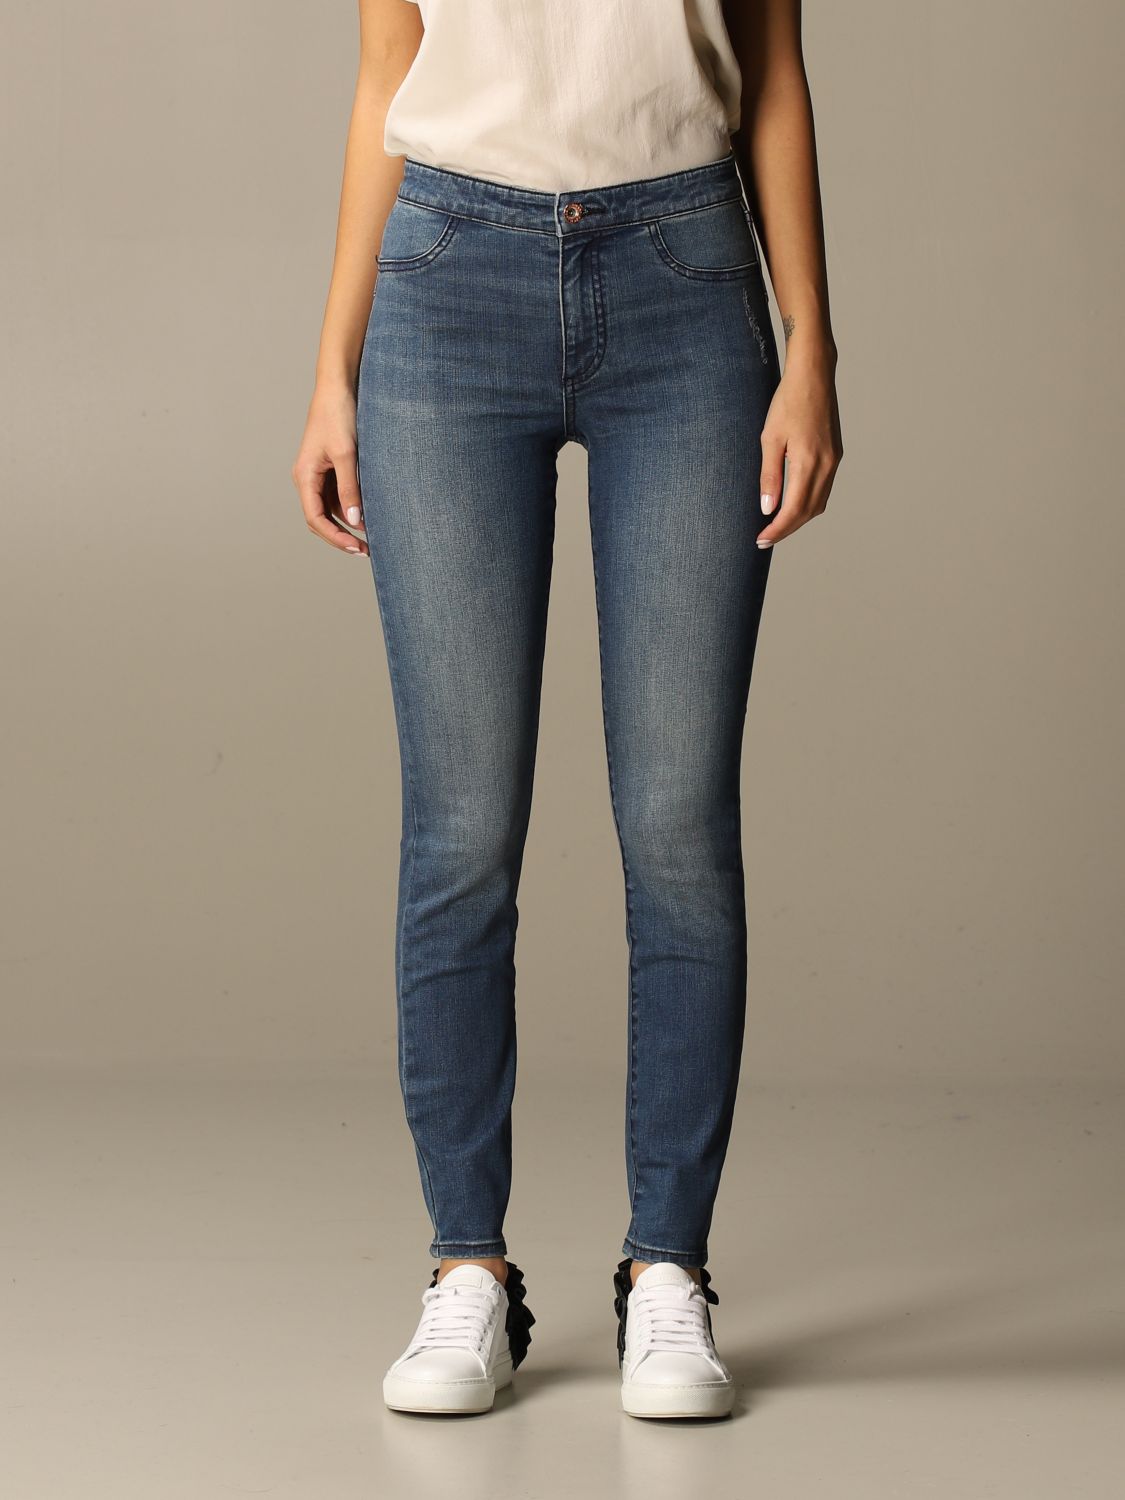 Armani Exchange Outlet: Emporio Armani jeans in stretch used denim | Armani Exchange Women Denim | Jeans Armani Exchange 6HYJ12 Y2RFZ GIGLIO.COM